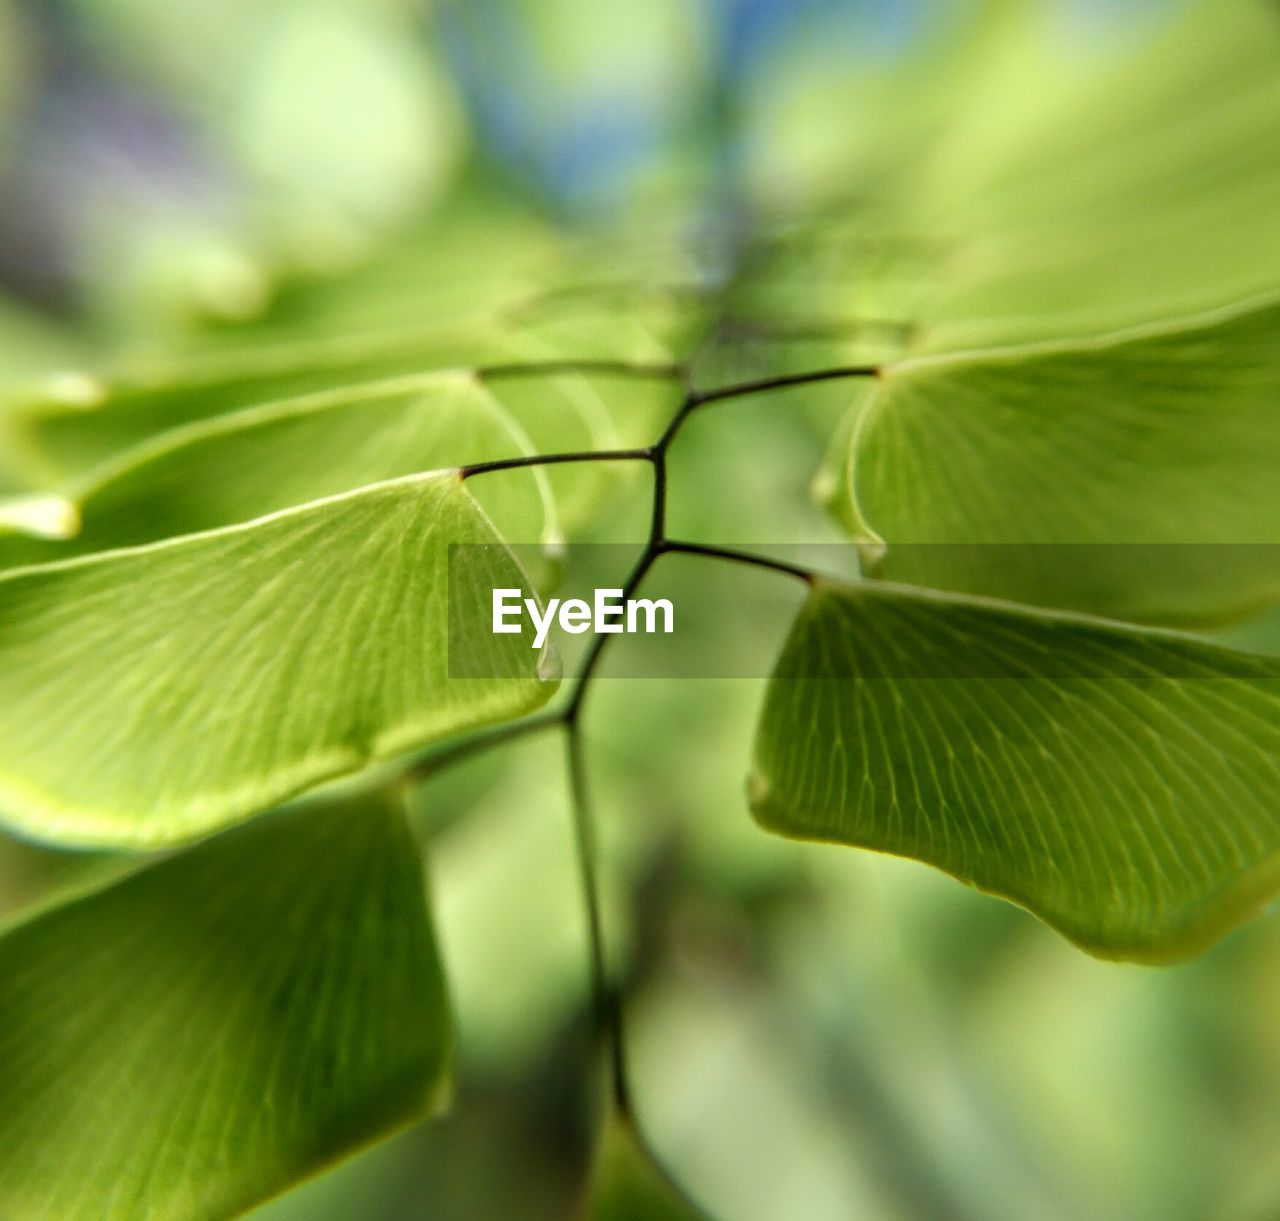 Nature green leaf